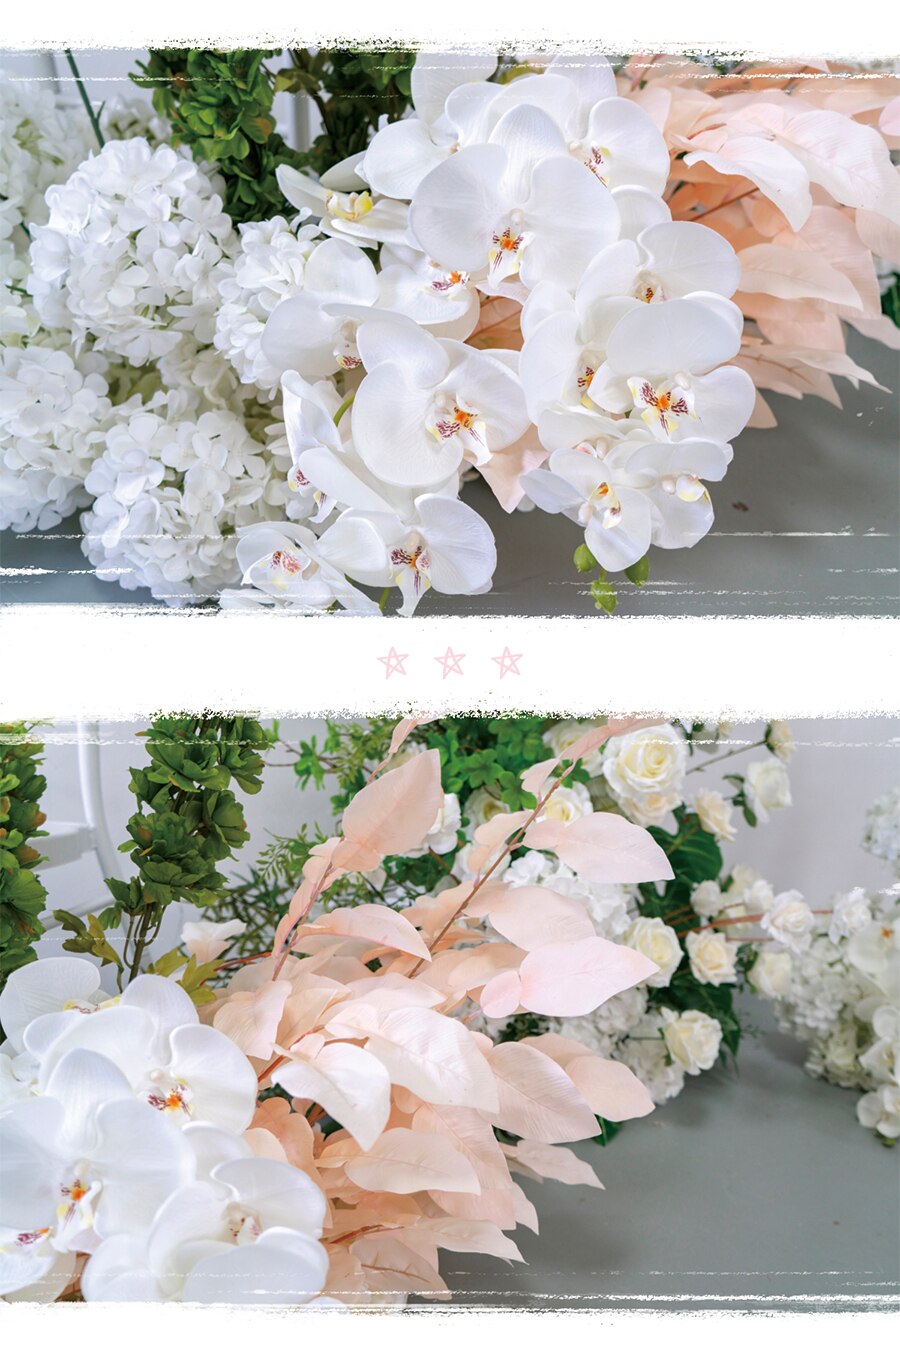 january birthday flower arrangements4